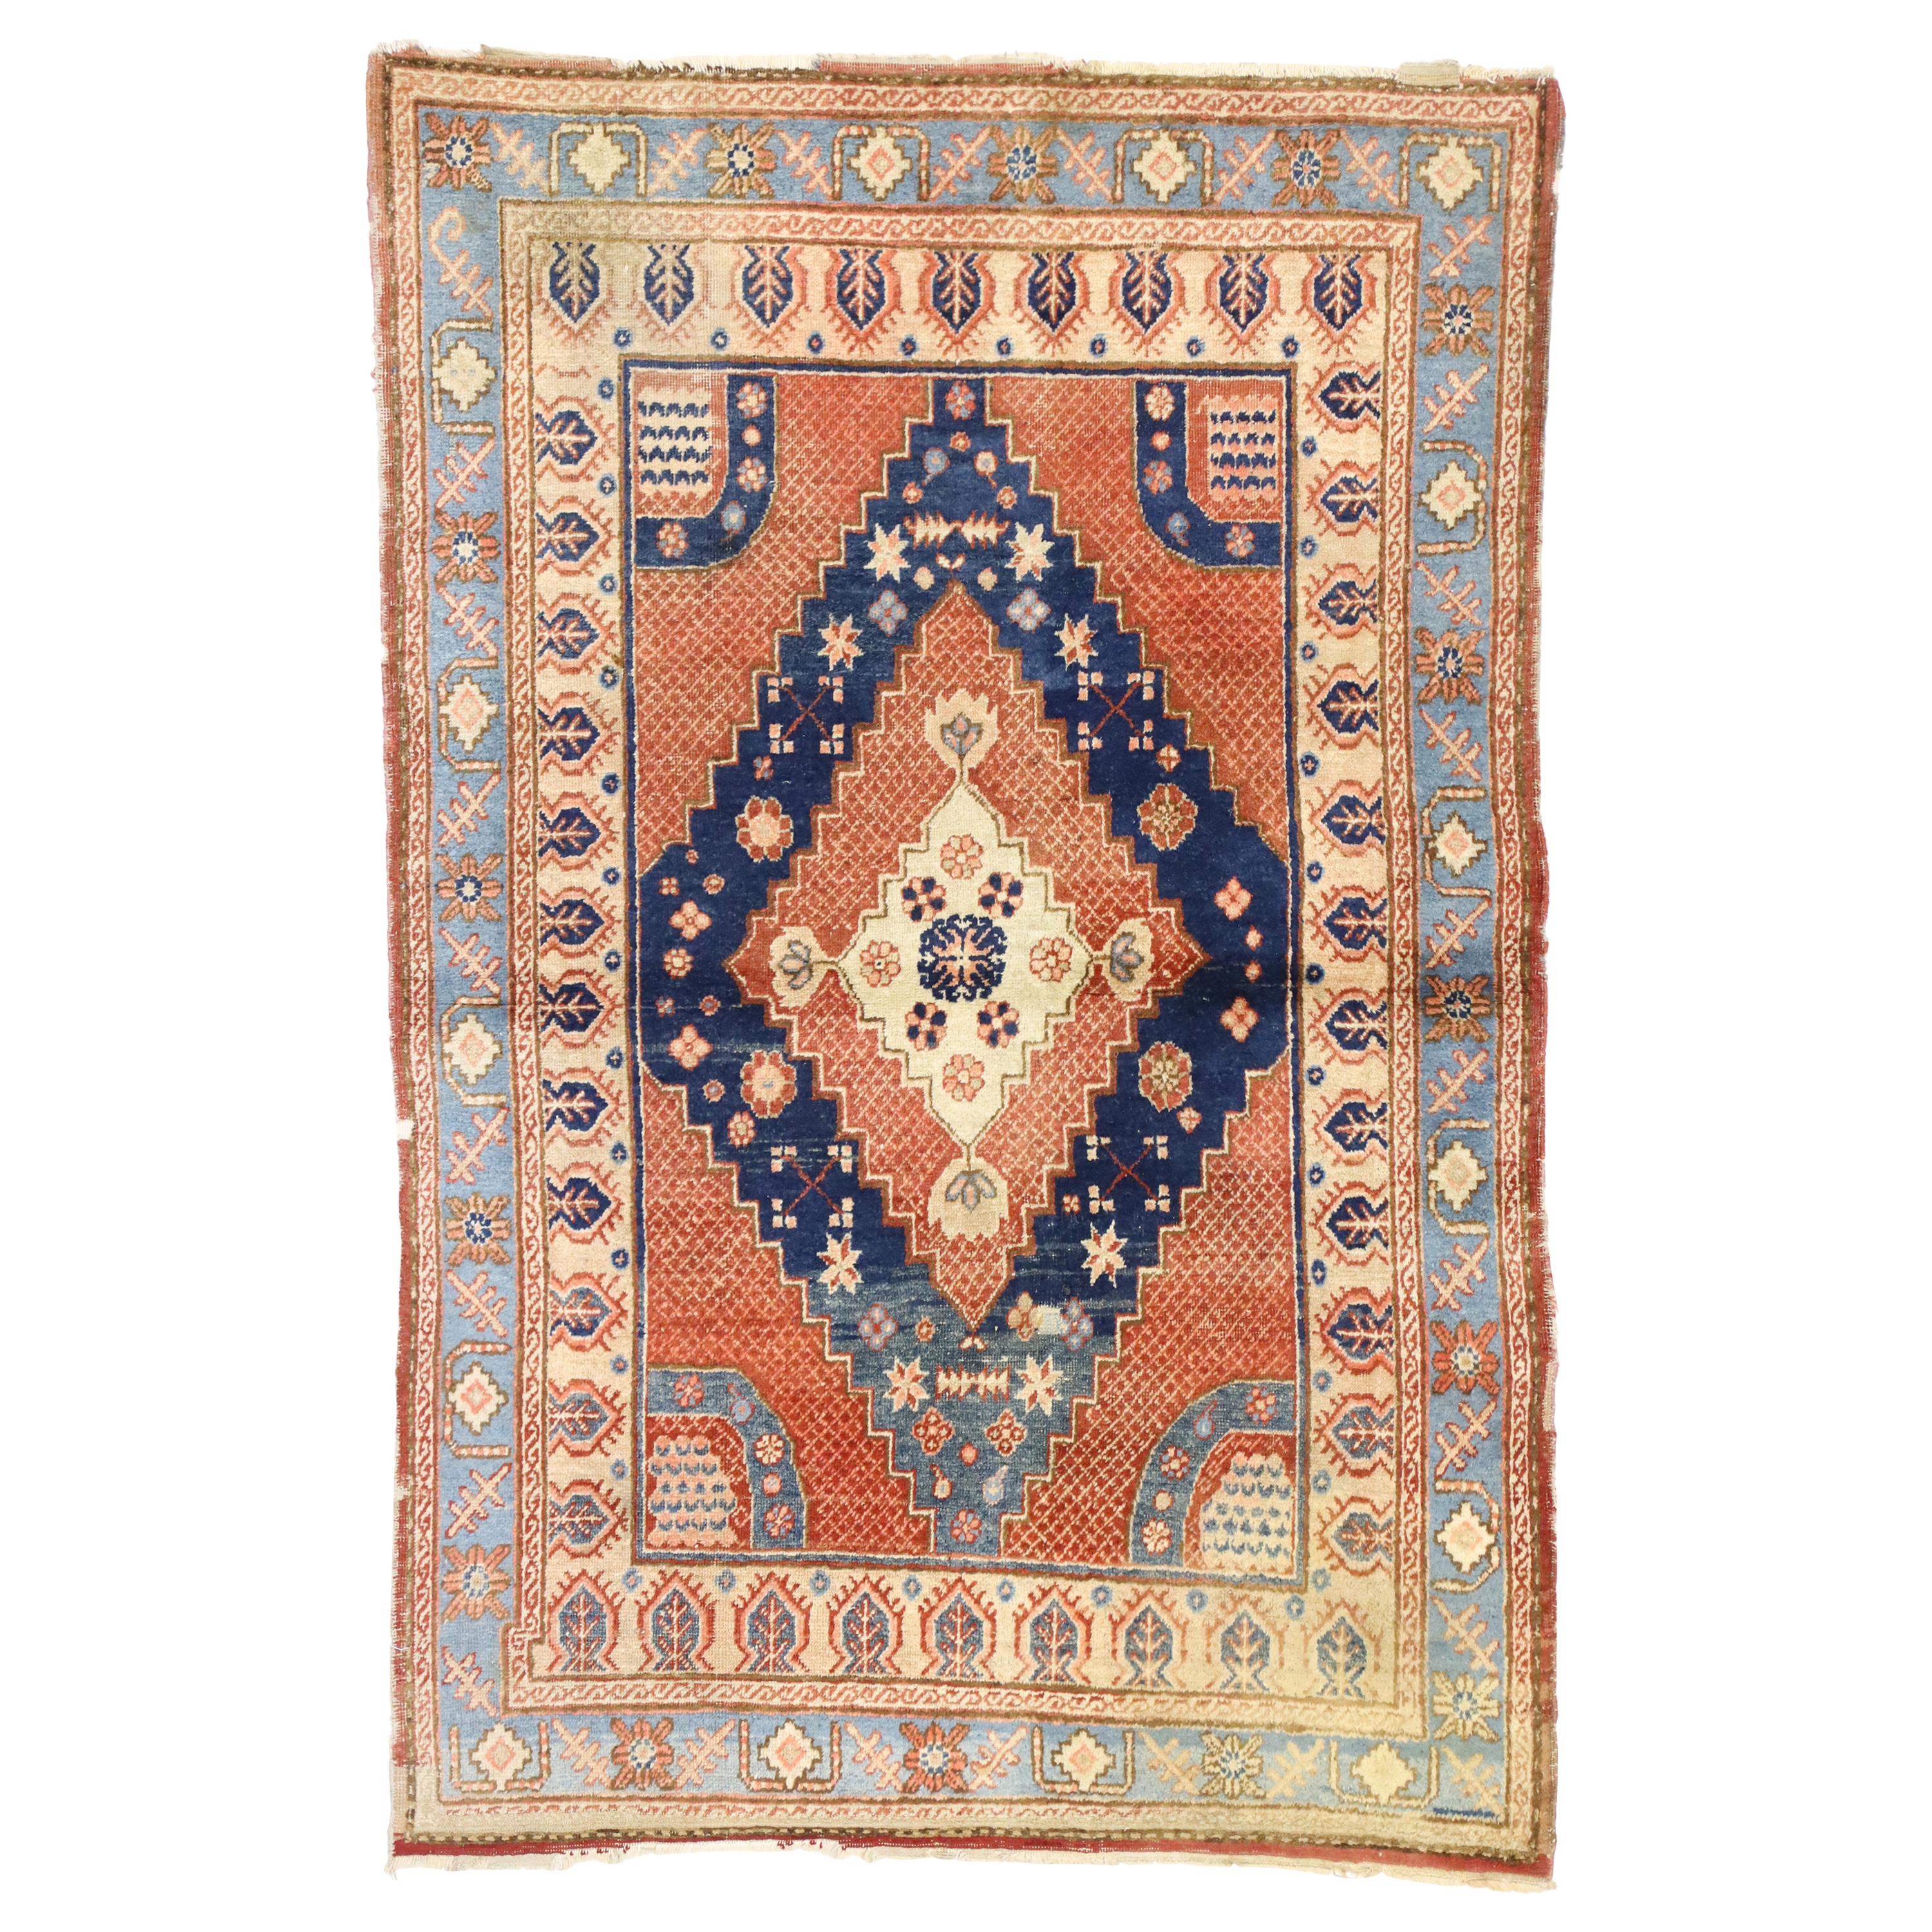 British Colonial Style Antique Persian Hamadan Rug, Entry or Foyer Rug